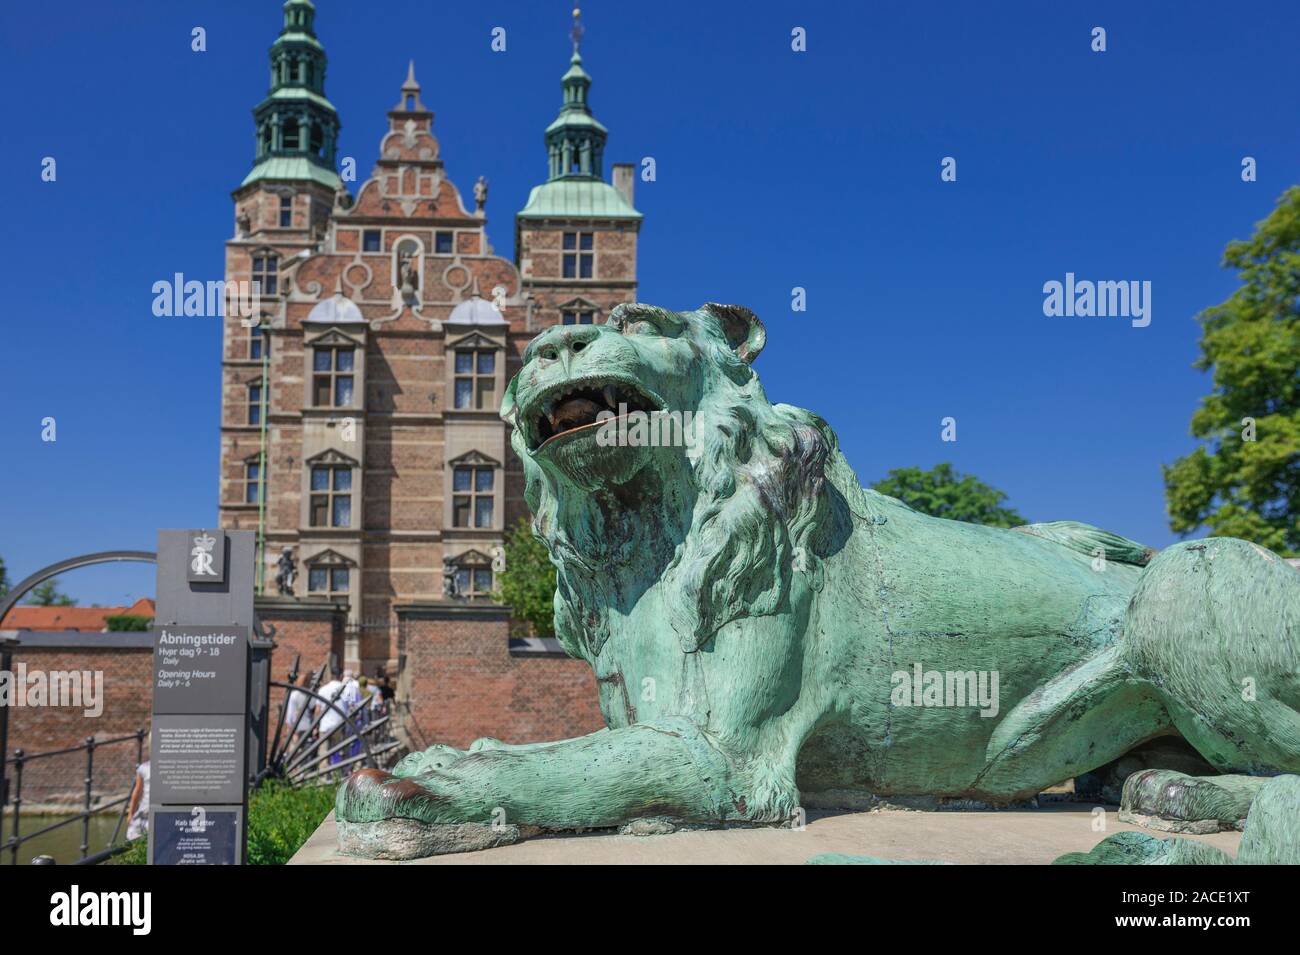 Ein Löwe Statue vor dem Schloss Rosenborg in Kopenhagen, Dänemark. Stockfoto